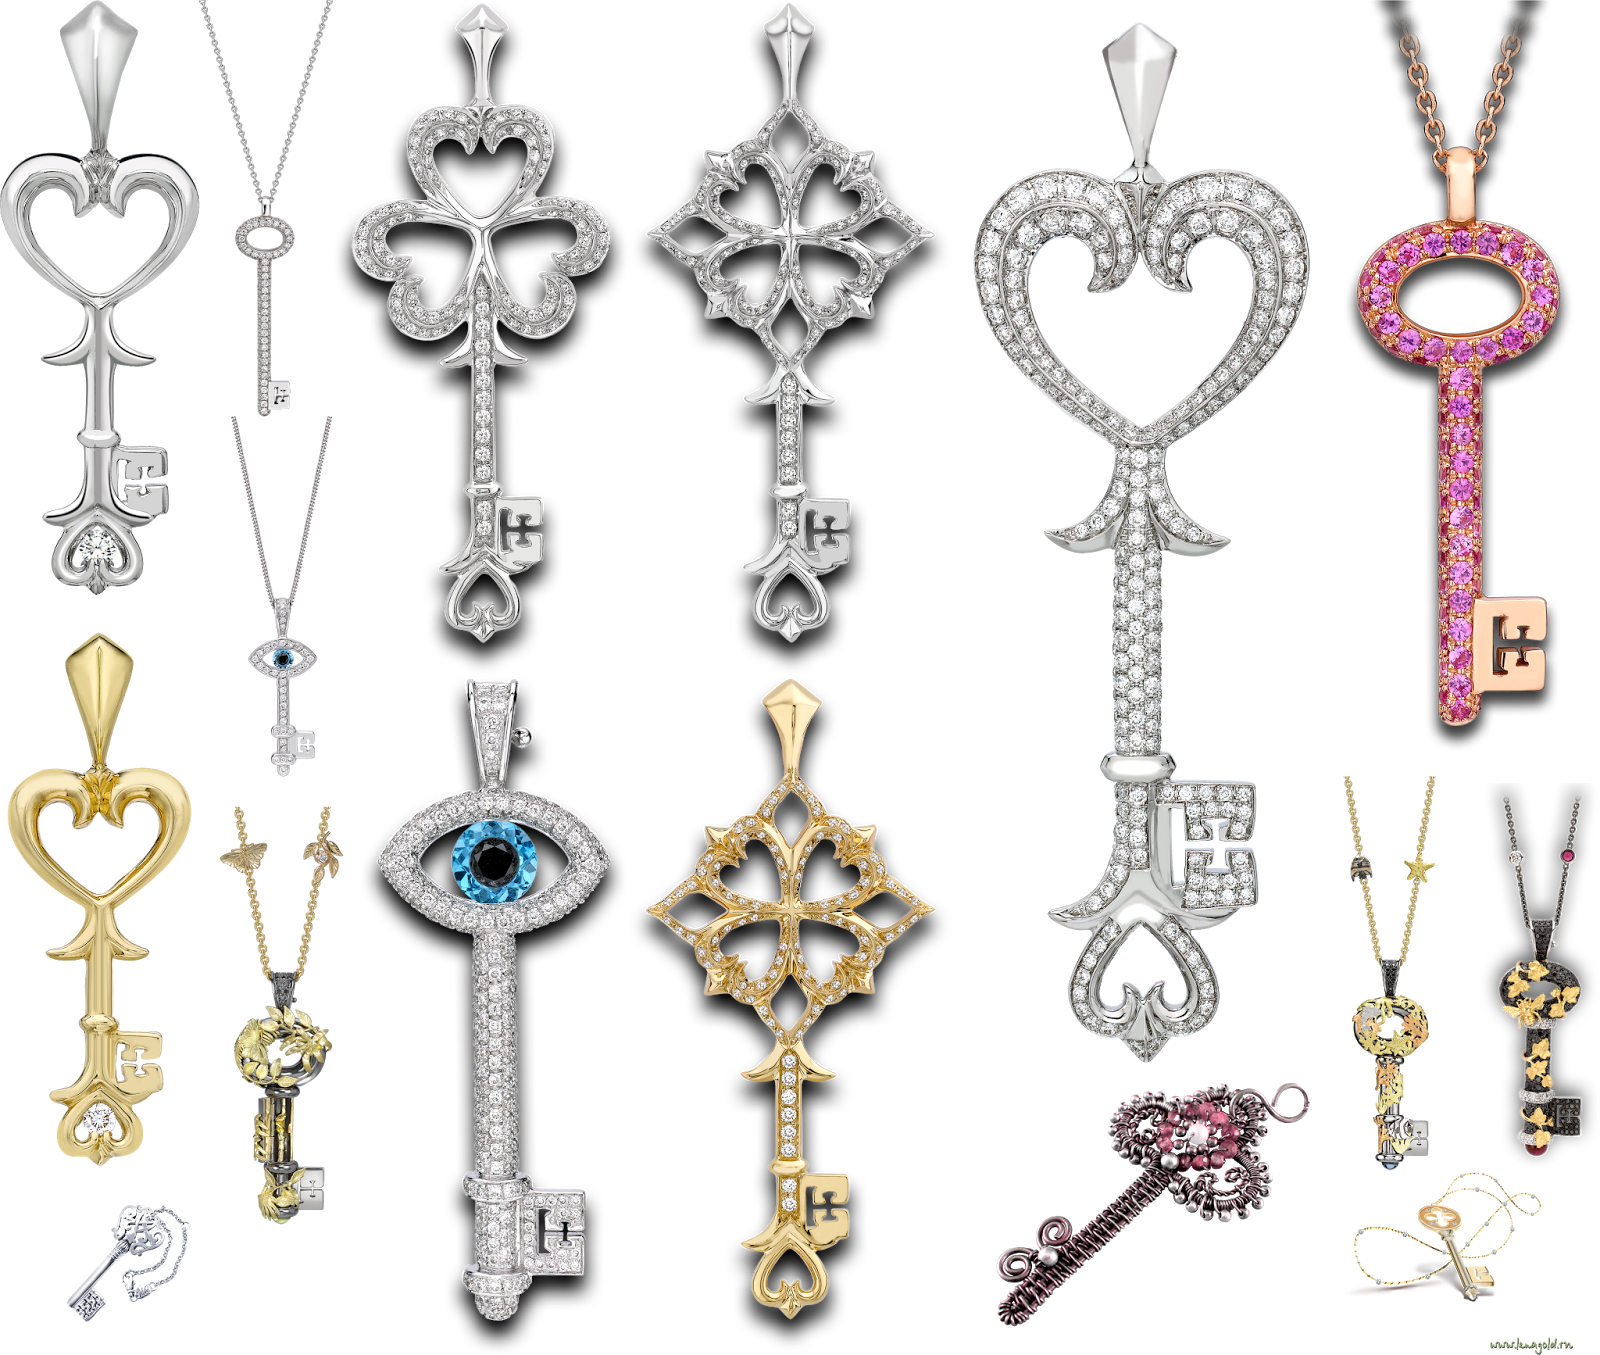 Покажи картинку ключ. Красивые ключи. Красивый ключик. Ключи красивые нарисованные. Изображение ключа.